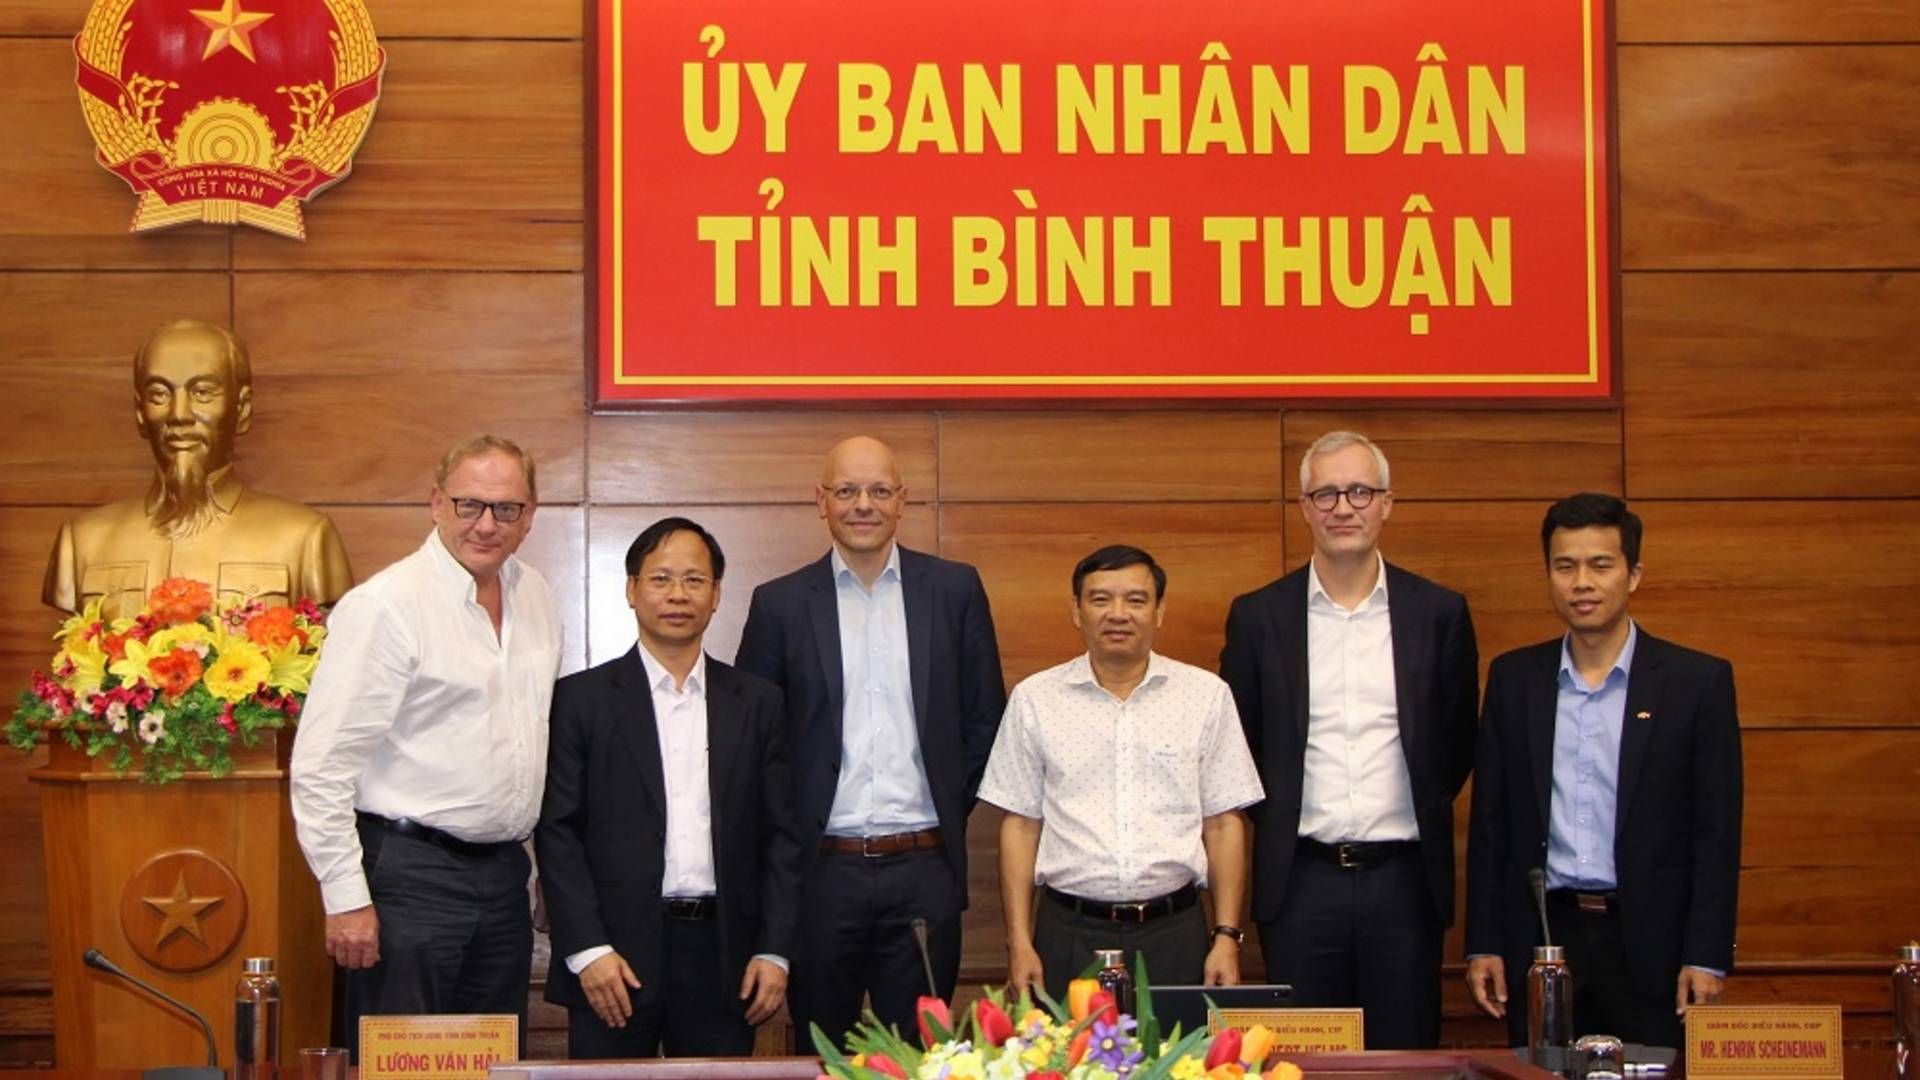 Copenhagen Infrastructure Partners recently opened an office in Vietnam | Photo: Tinh Binh Thuan